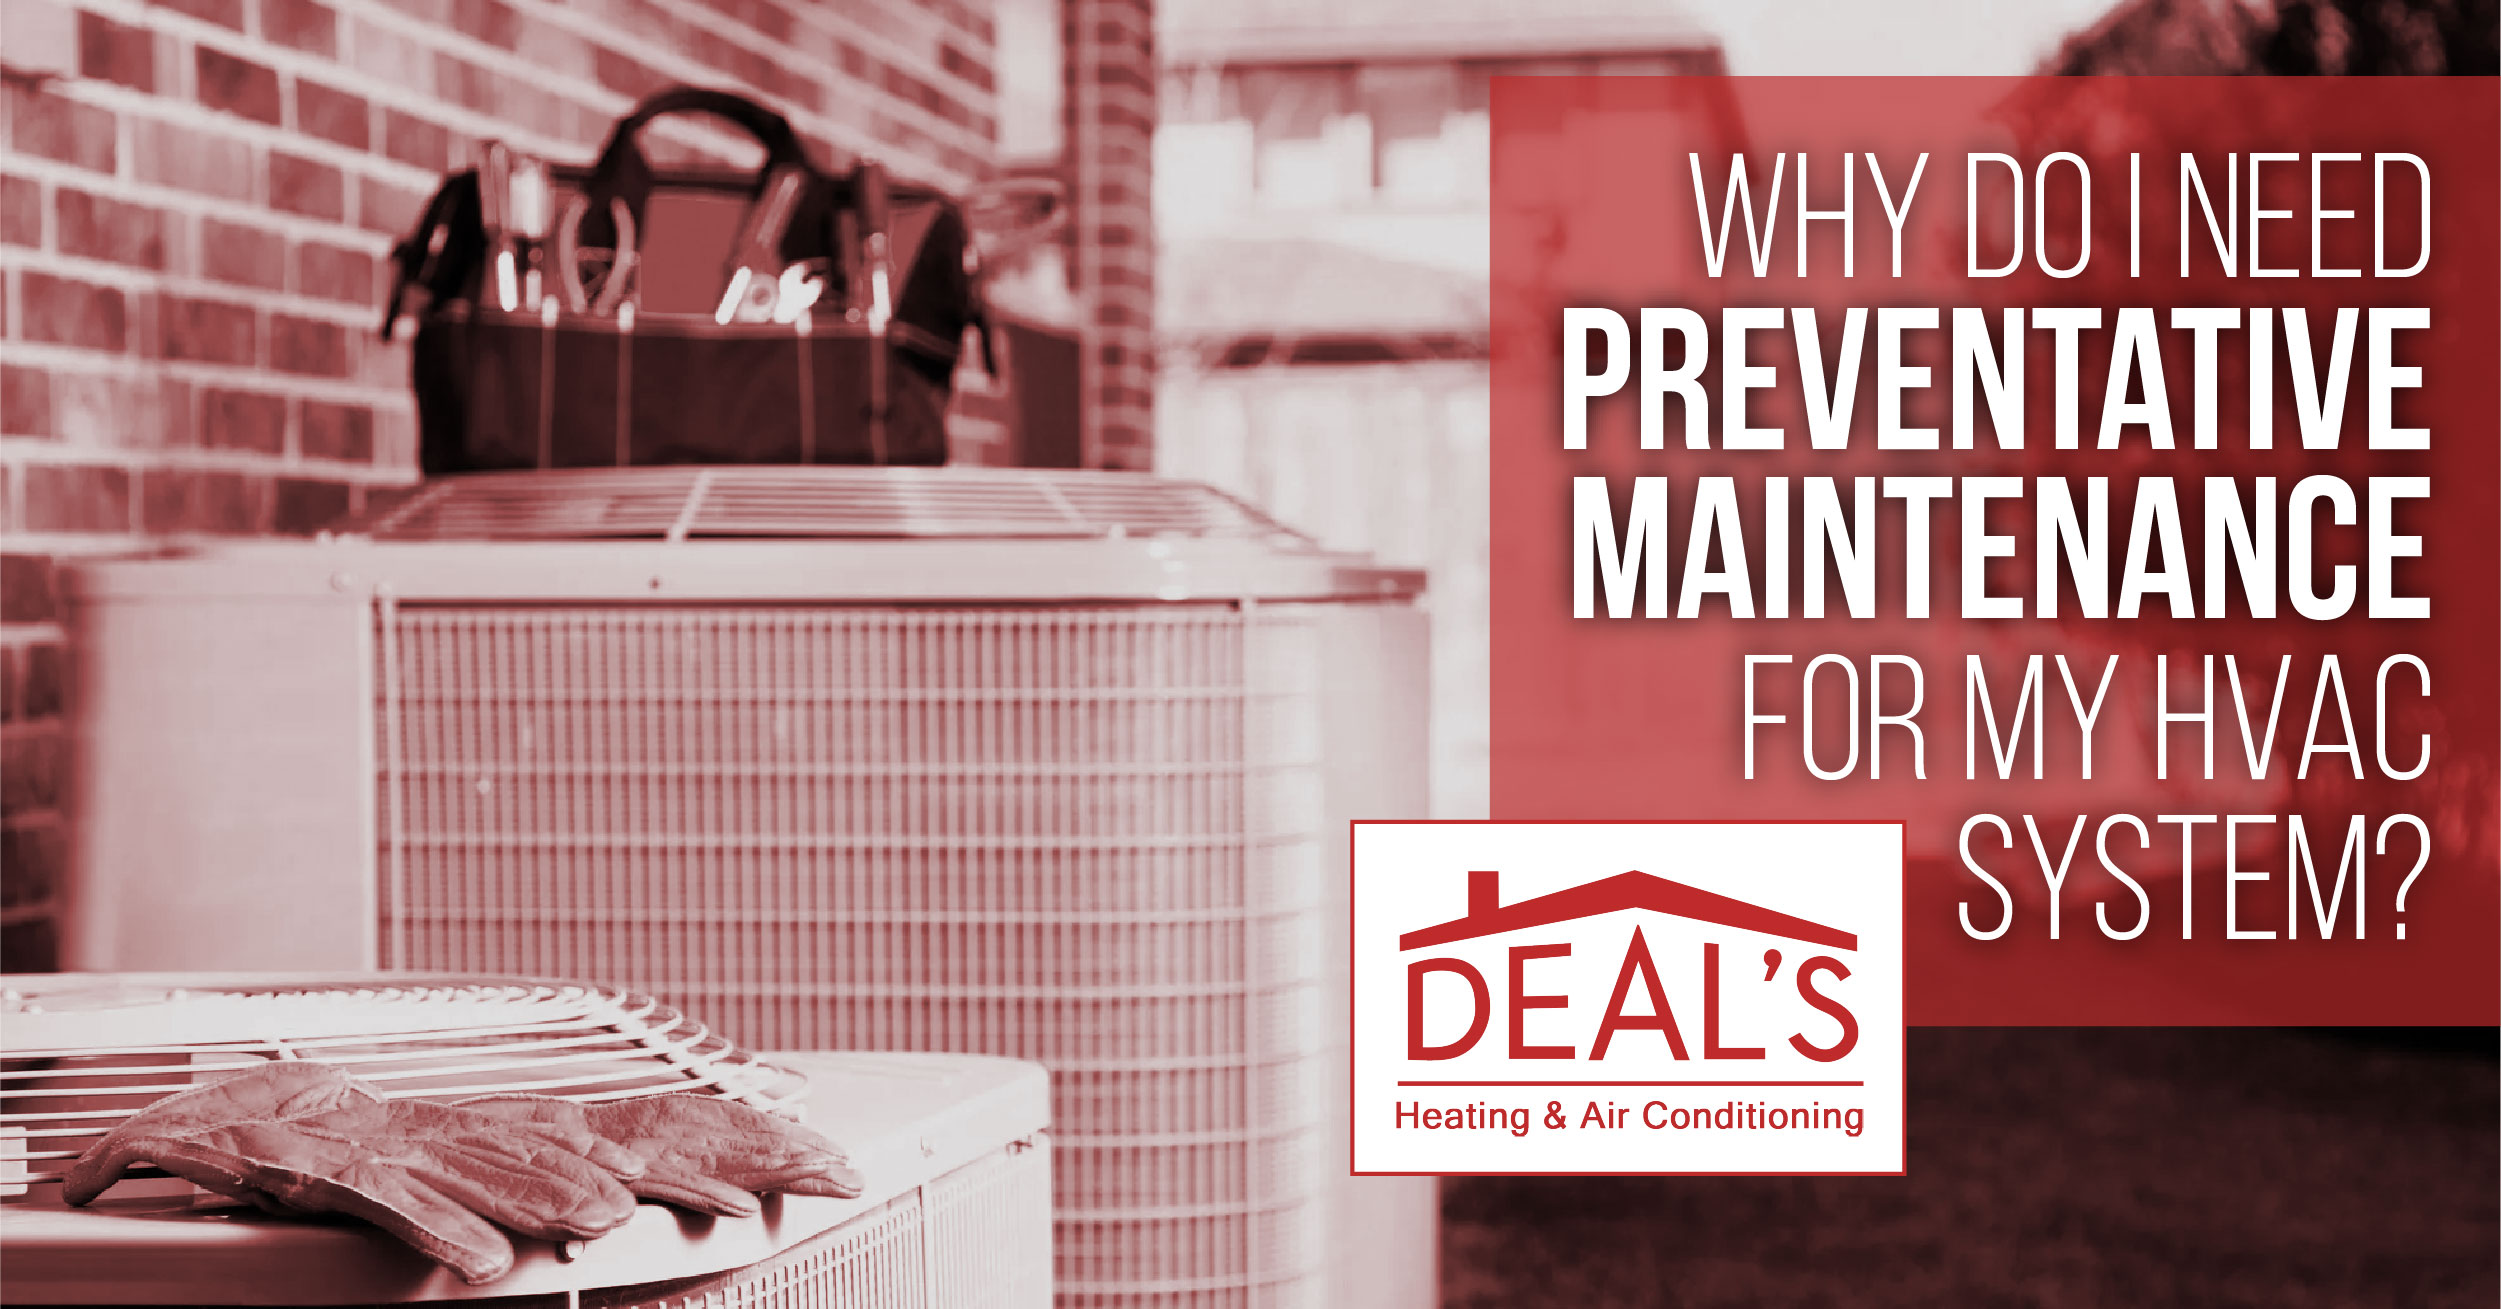 Why Do I Need Preventative Maintenance for My HVAC System?